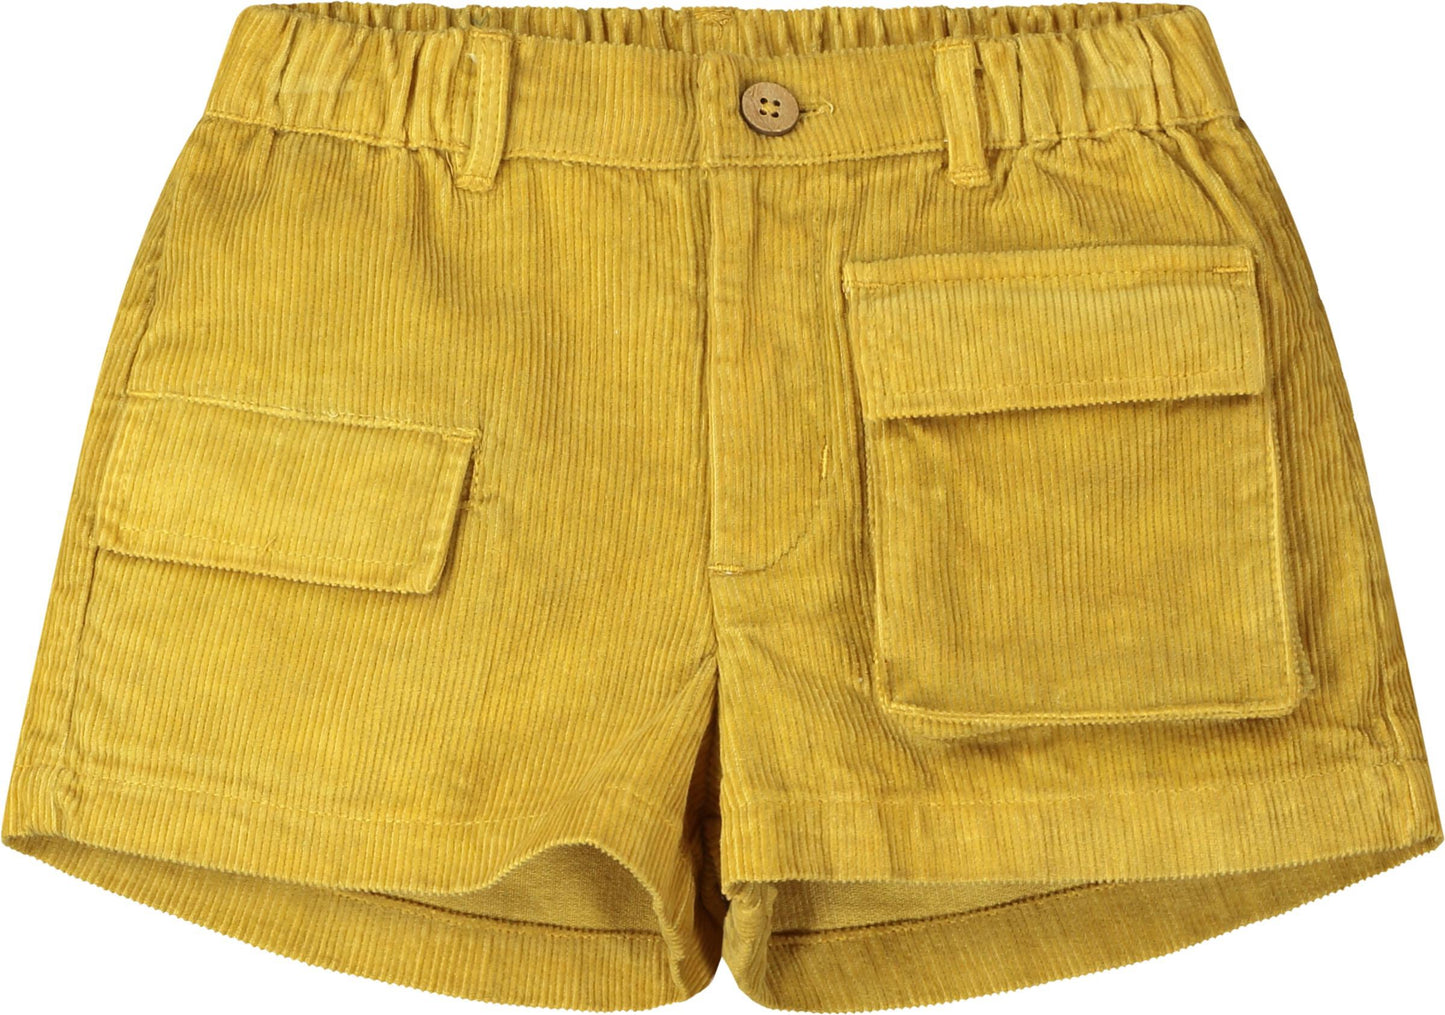 Yellow Corduroy Shorts